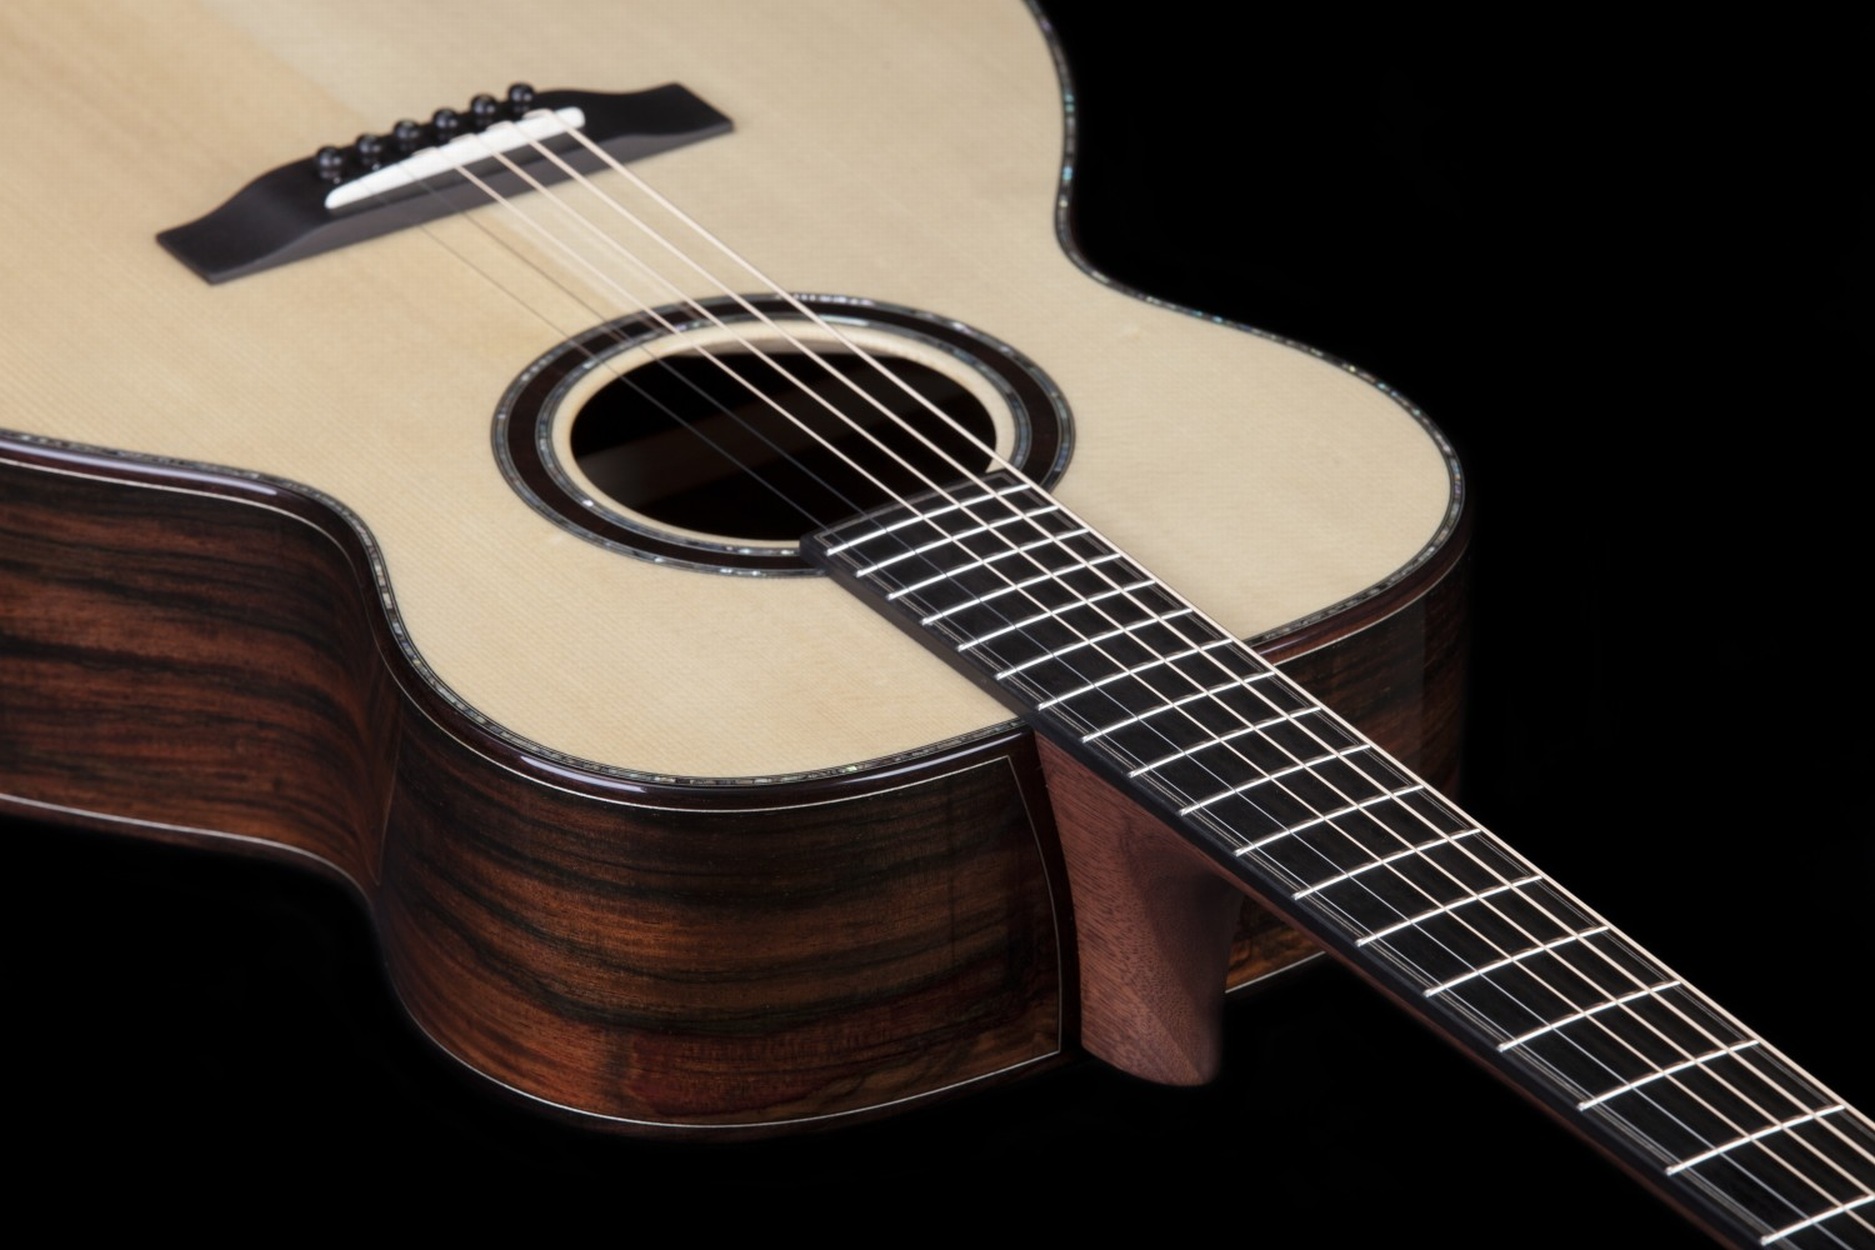 OM  33 F Rio Rosewood - BSG Custom Guitars